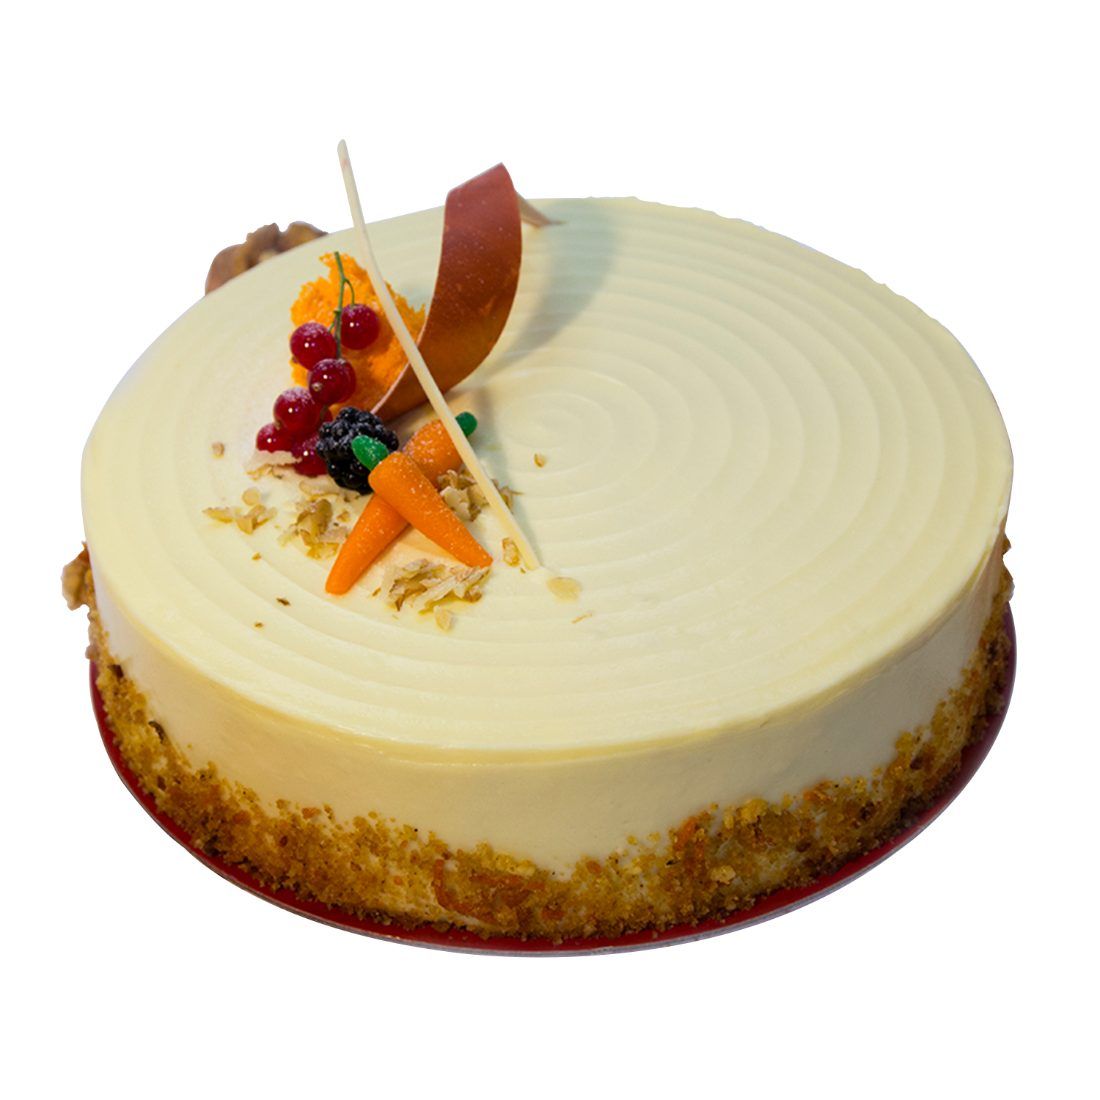 Carrot Walnut Buttercream Cake 500 gm : Gift/Send Gift Type Gifts Online  JVS1263126 |IGP.com